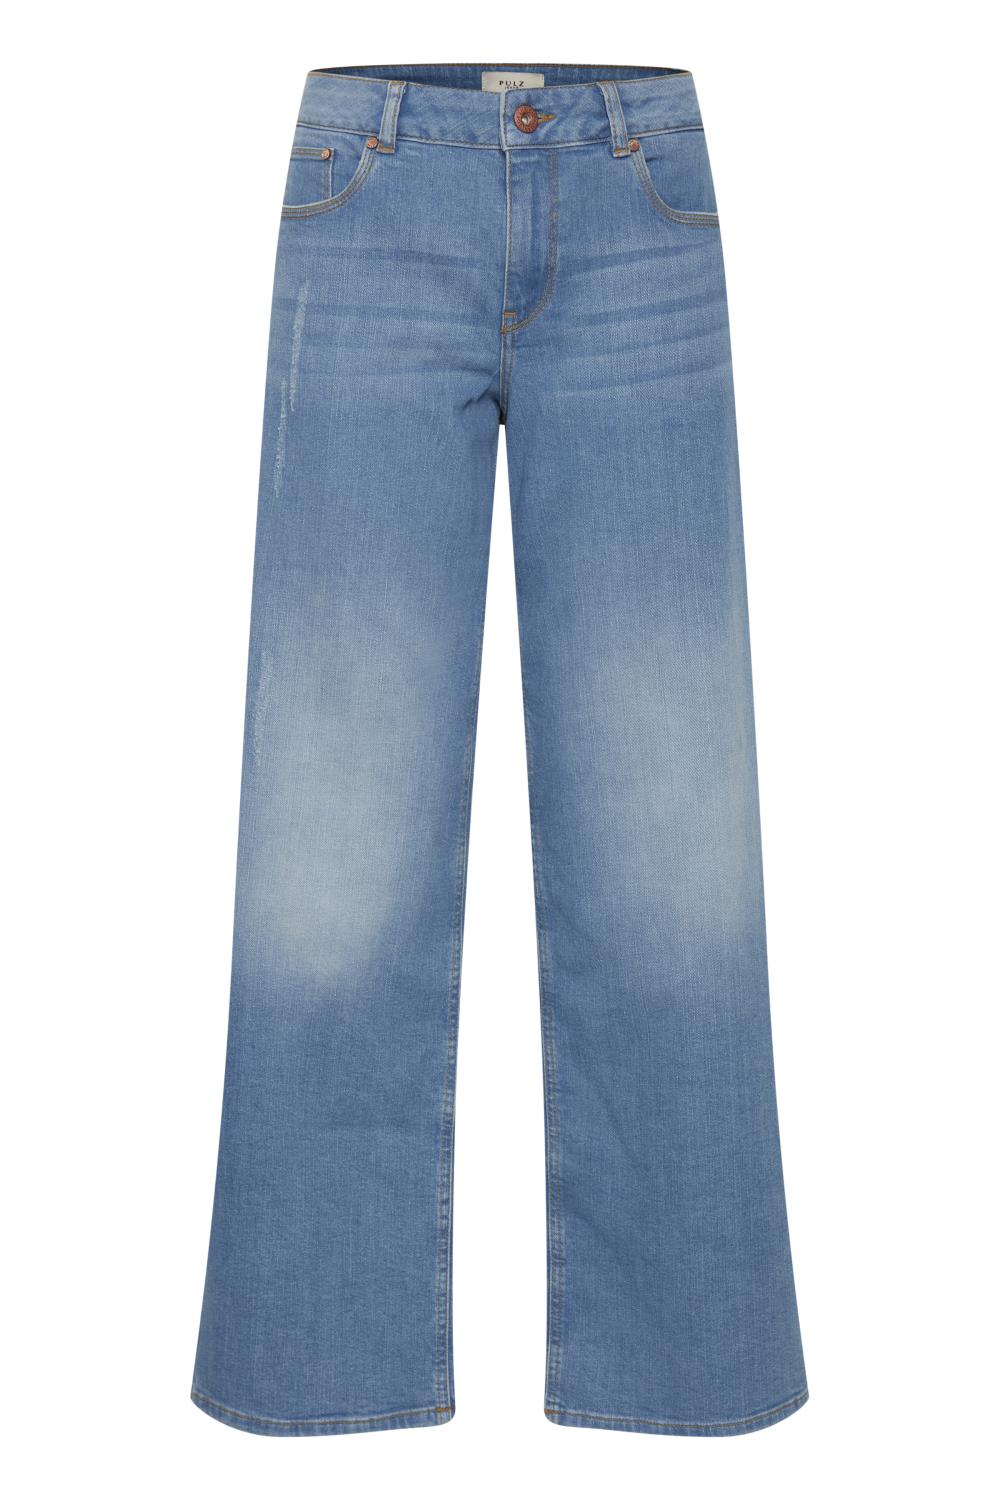 Pulz Emma Jeans Wide Leg, lys denim blå